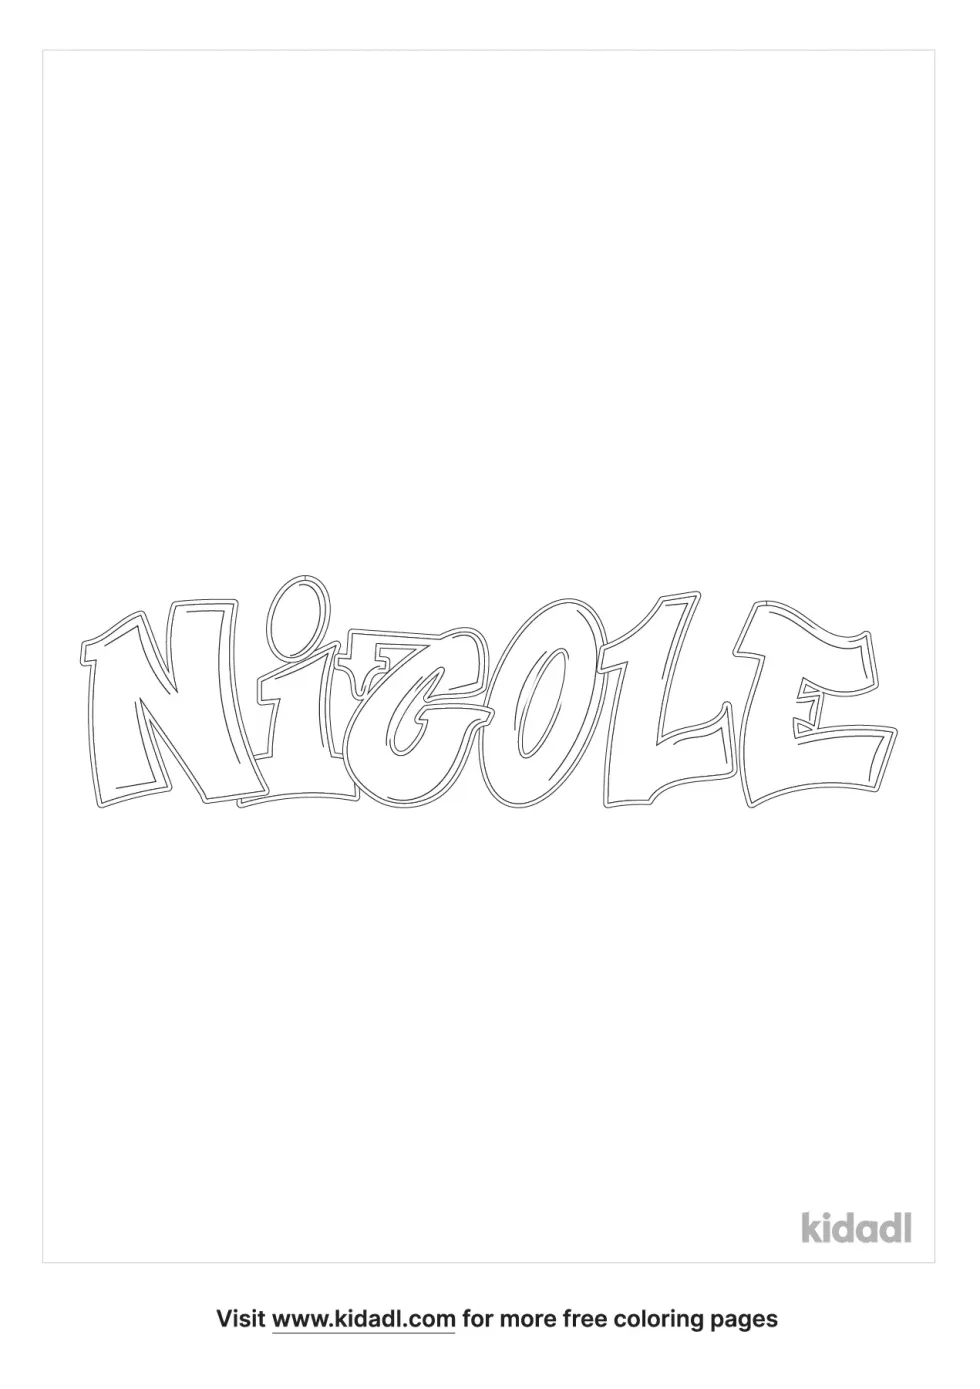 Graffiti Words Name Nicole